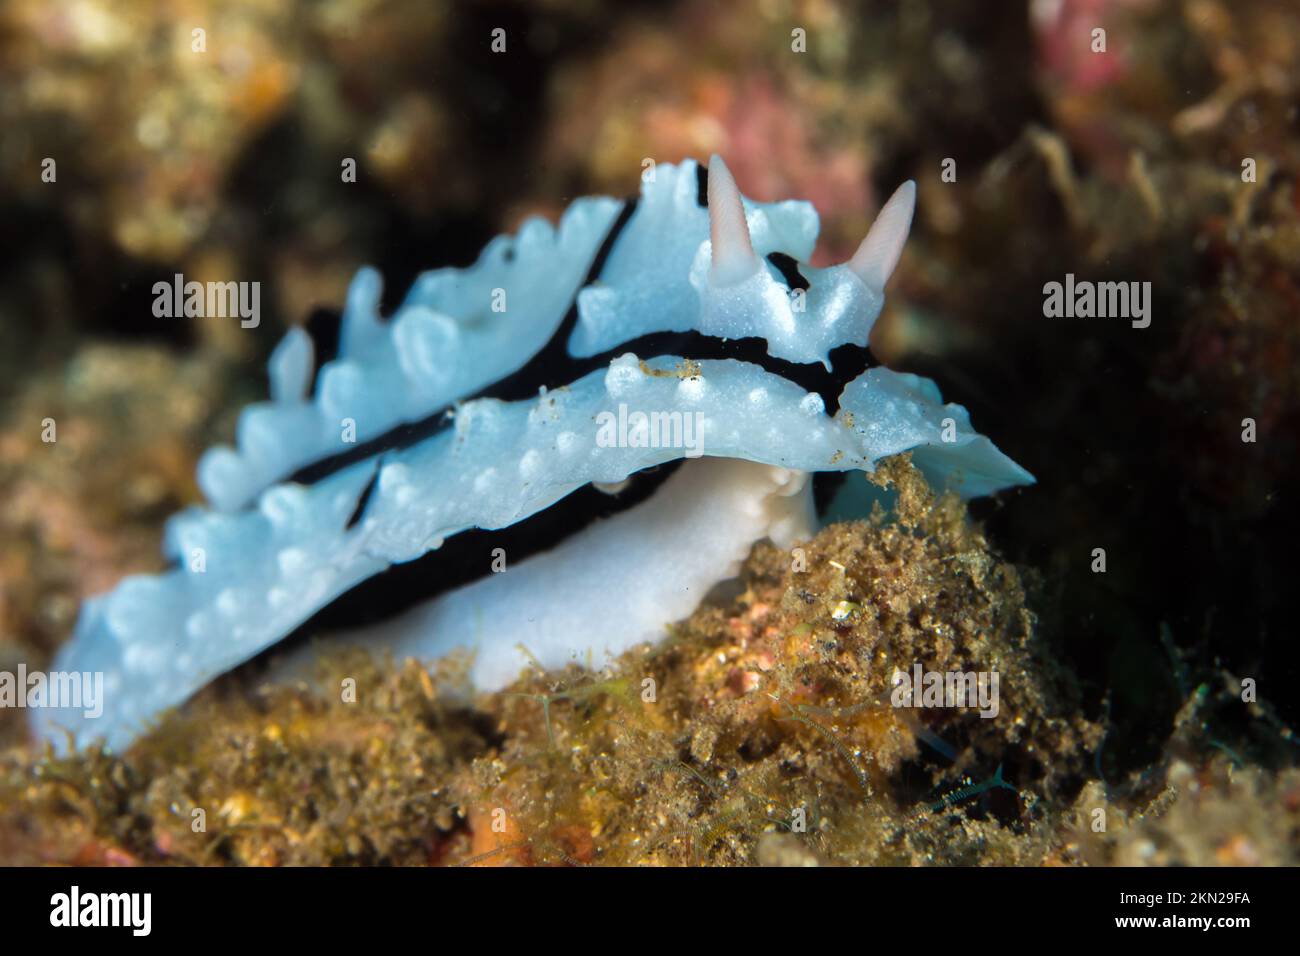 Colorful nudibranch sea slug crawling above coral reef in indonesia Stock Photo